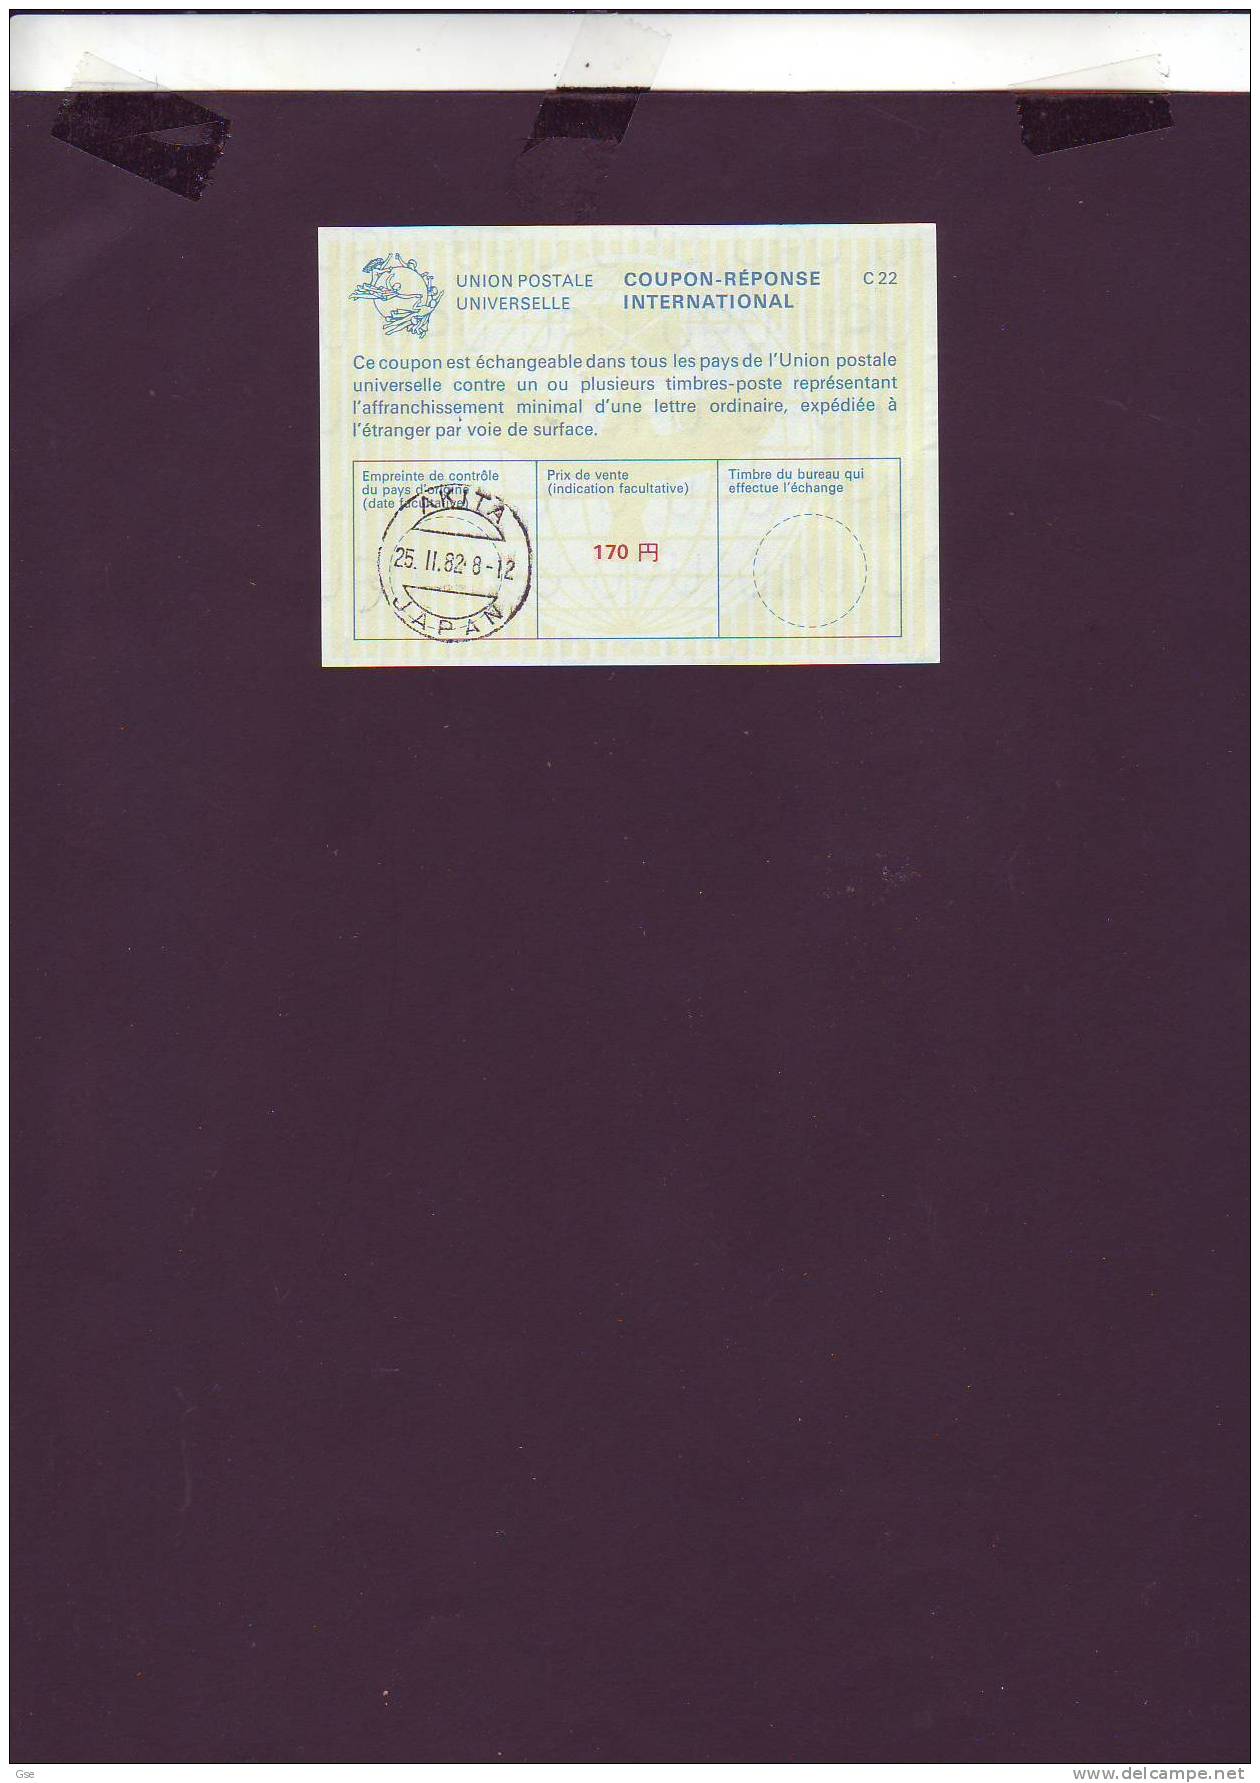 GIAPPONE 1982 - Coupon Réponse International - Cartes Postales